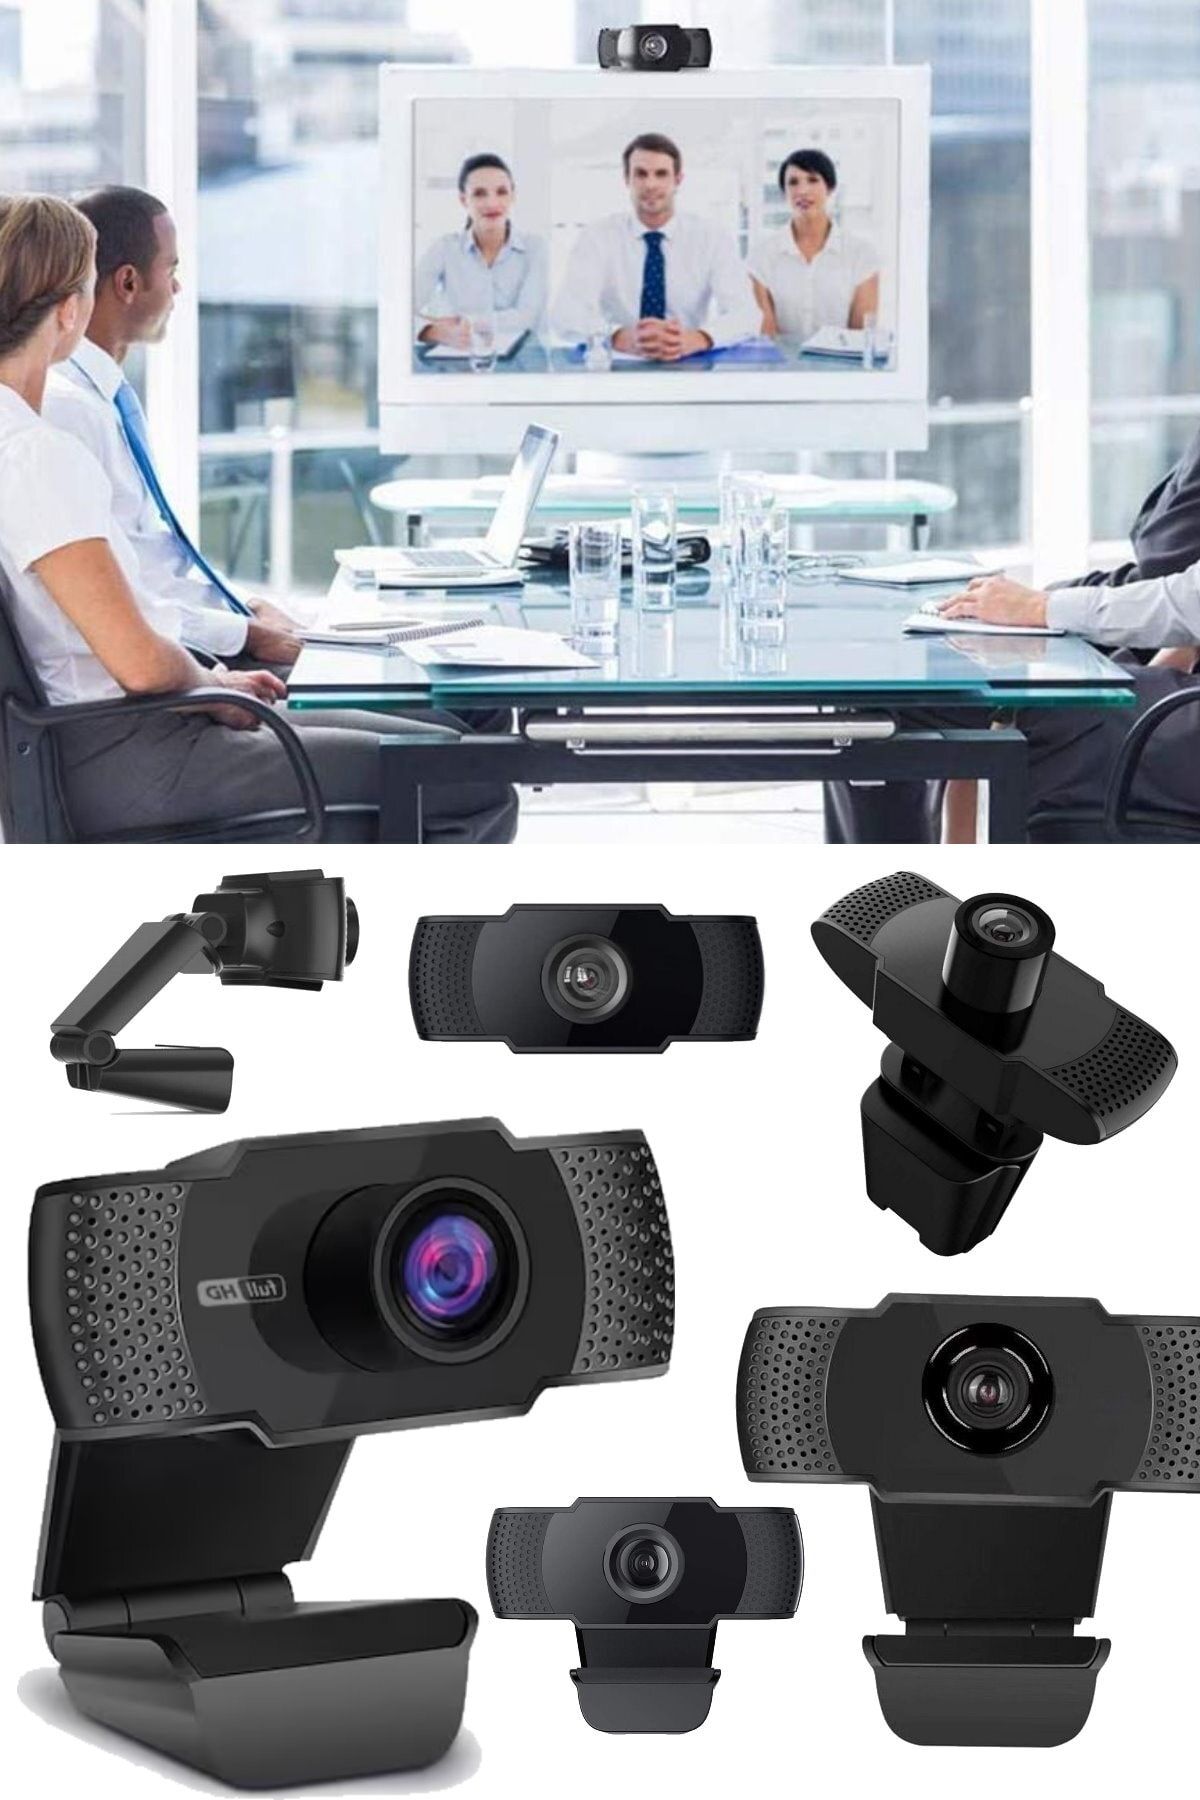 Utelips Mikrofon Konferans Video Netbook Kamera Hd 1080p Masaüstü Webcam Bilgisayar Webcam Profesyonel